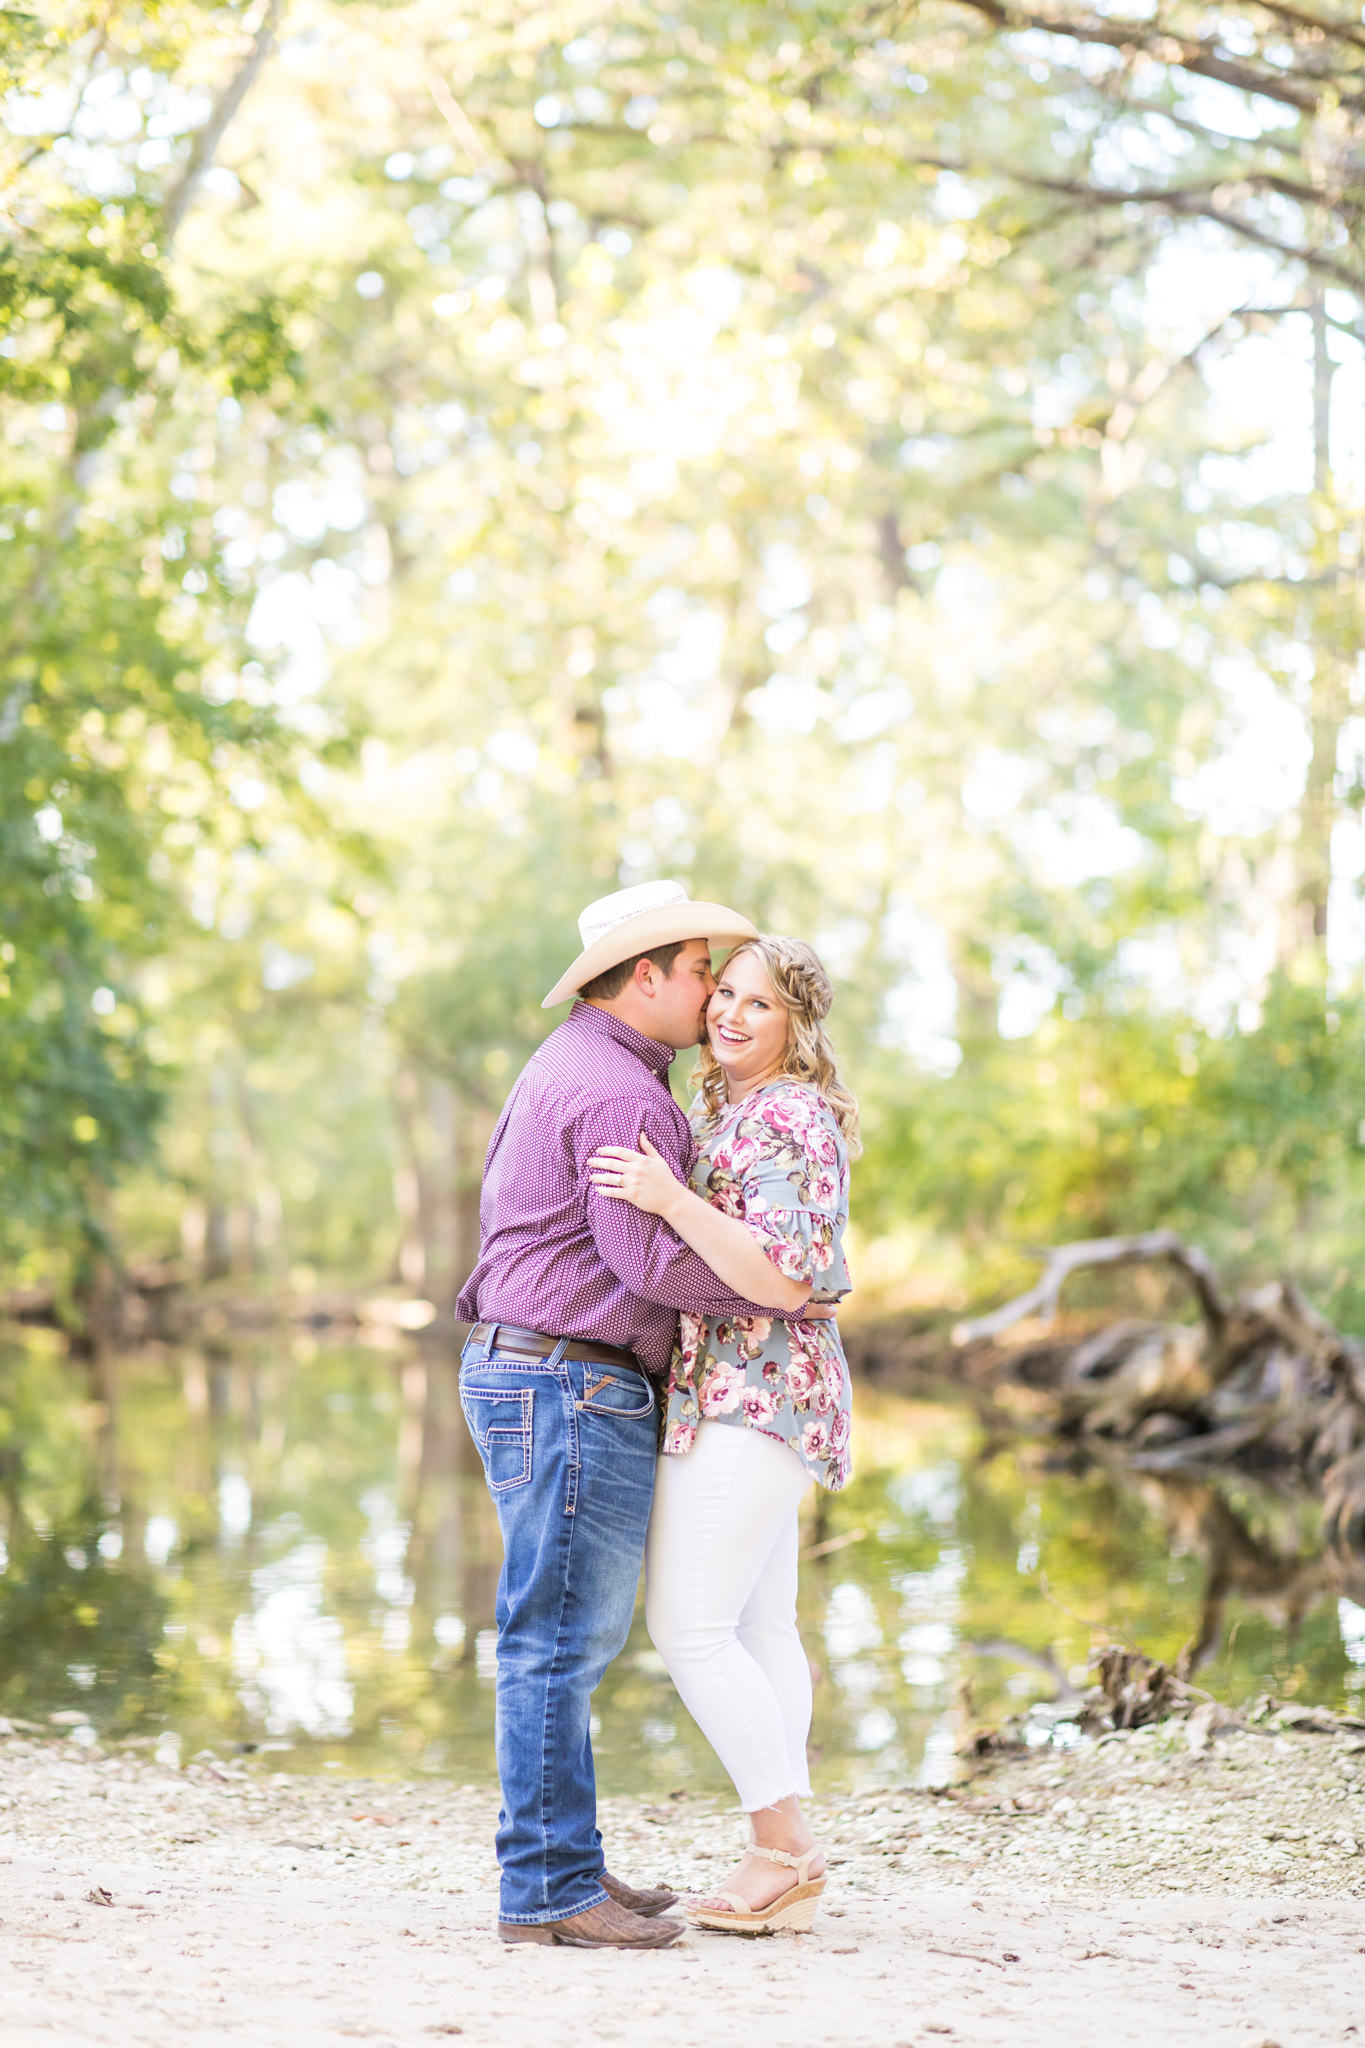 A Summer Engagement Session at Cibolo Nature Center in Boerne, TX by Dawn Elizabeth Studios, San Antonio Wedding Photographer